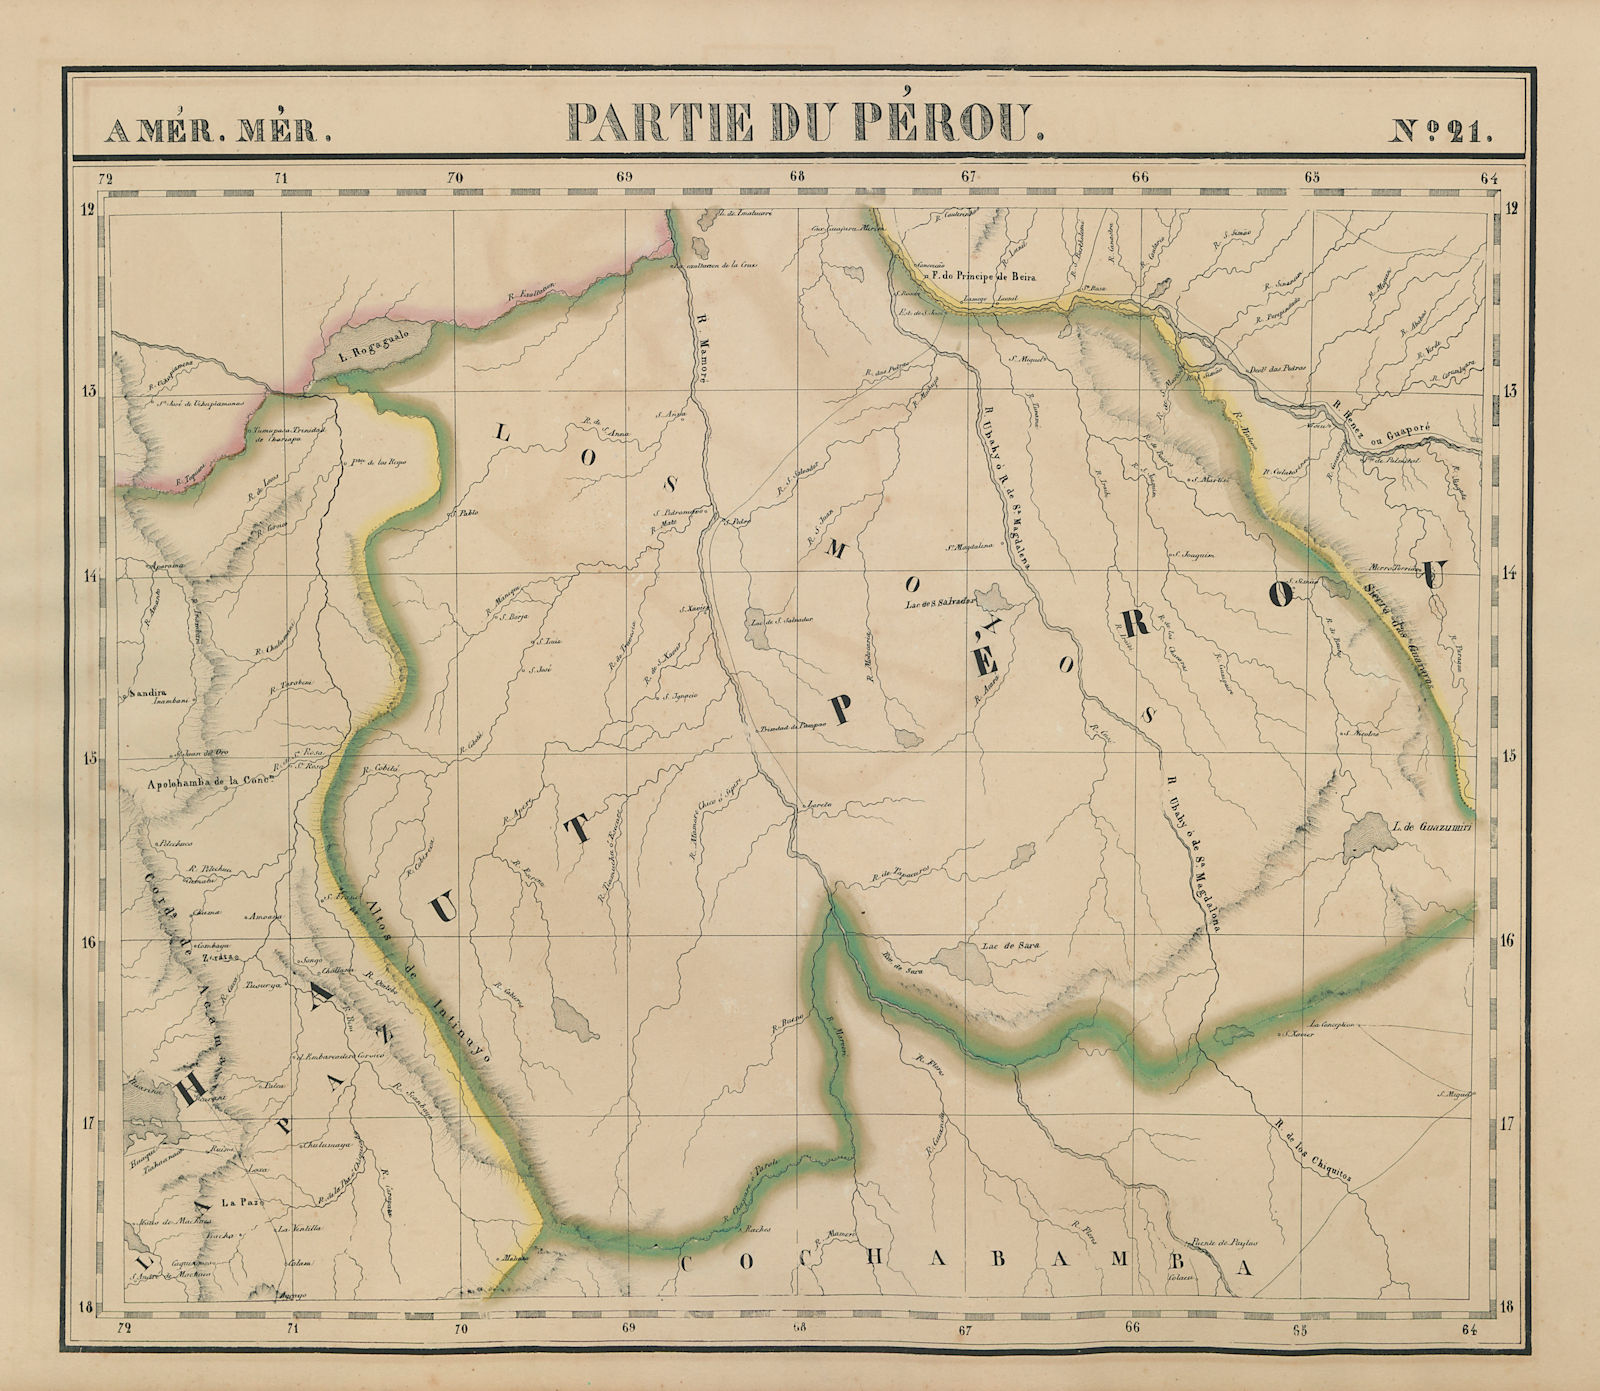 Amér. Mér. Pérou #21 Central Bolivia & SW Rondonia, Brazil VANDERMAELEN 1827 map